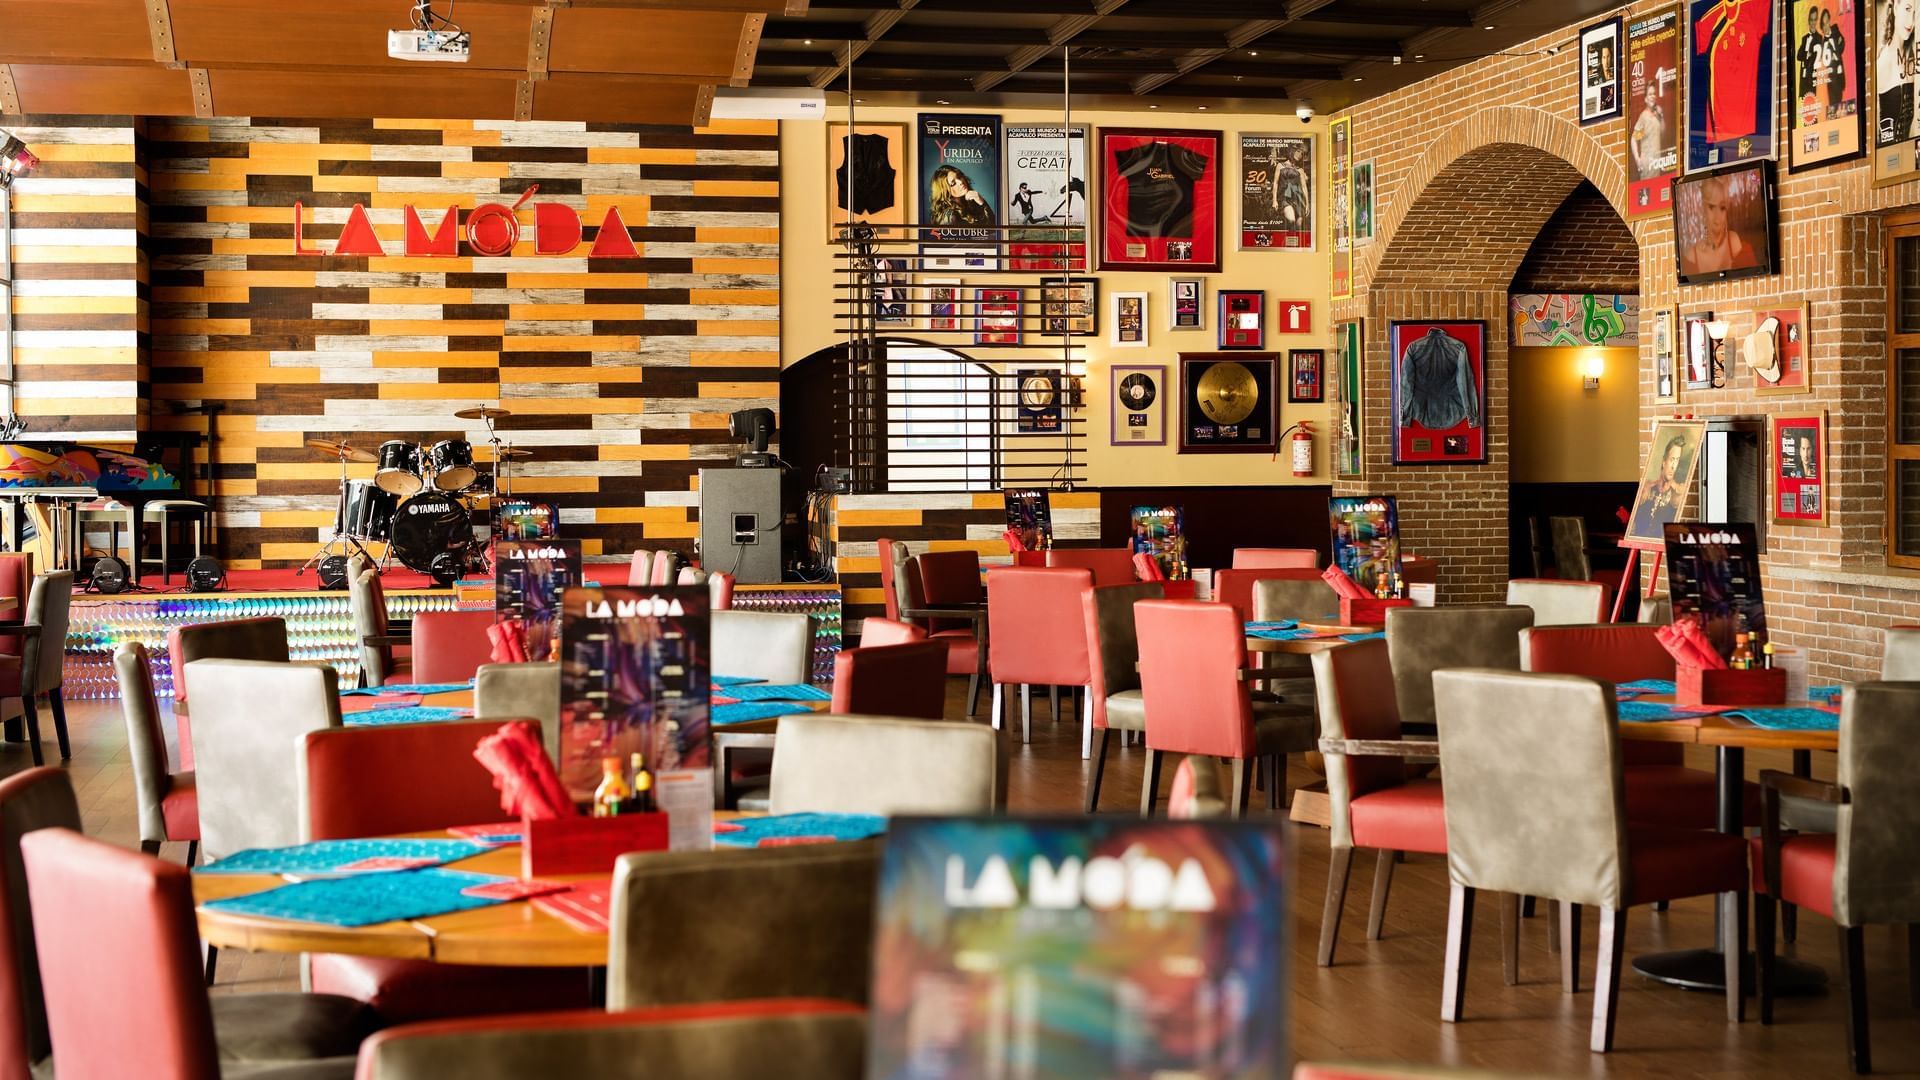 Dining area at La Moda Restaurant in Mundo Imperial